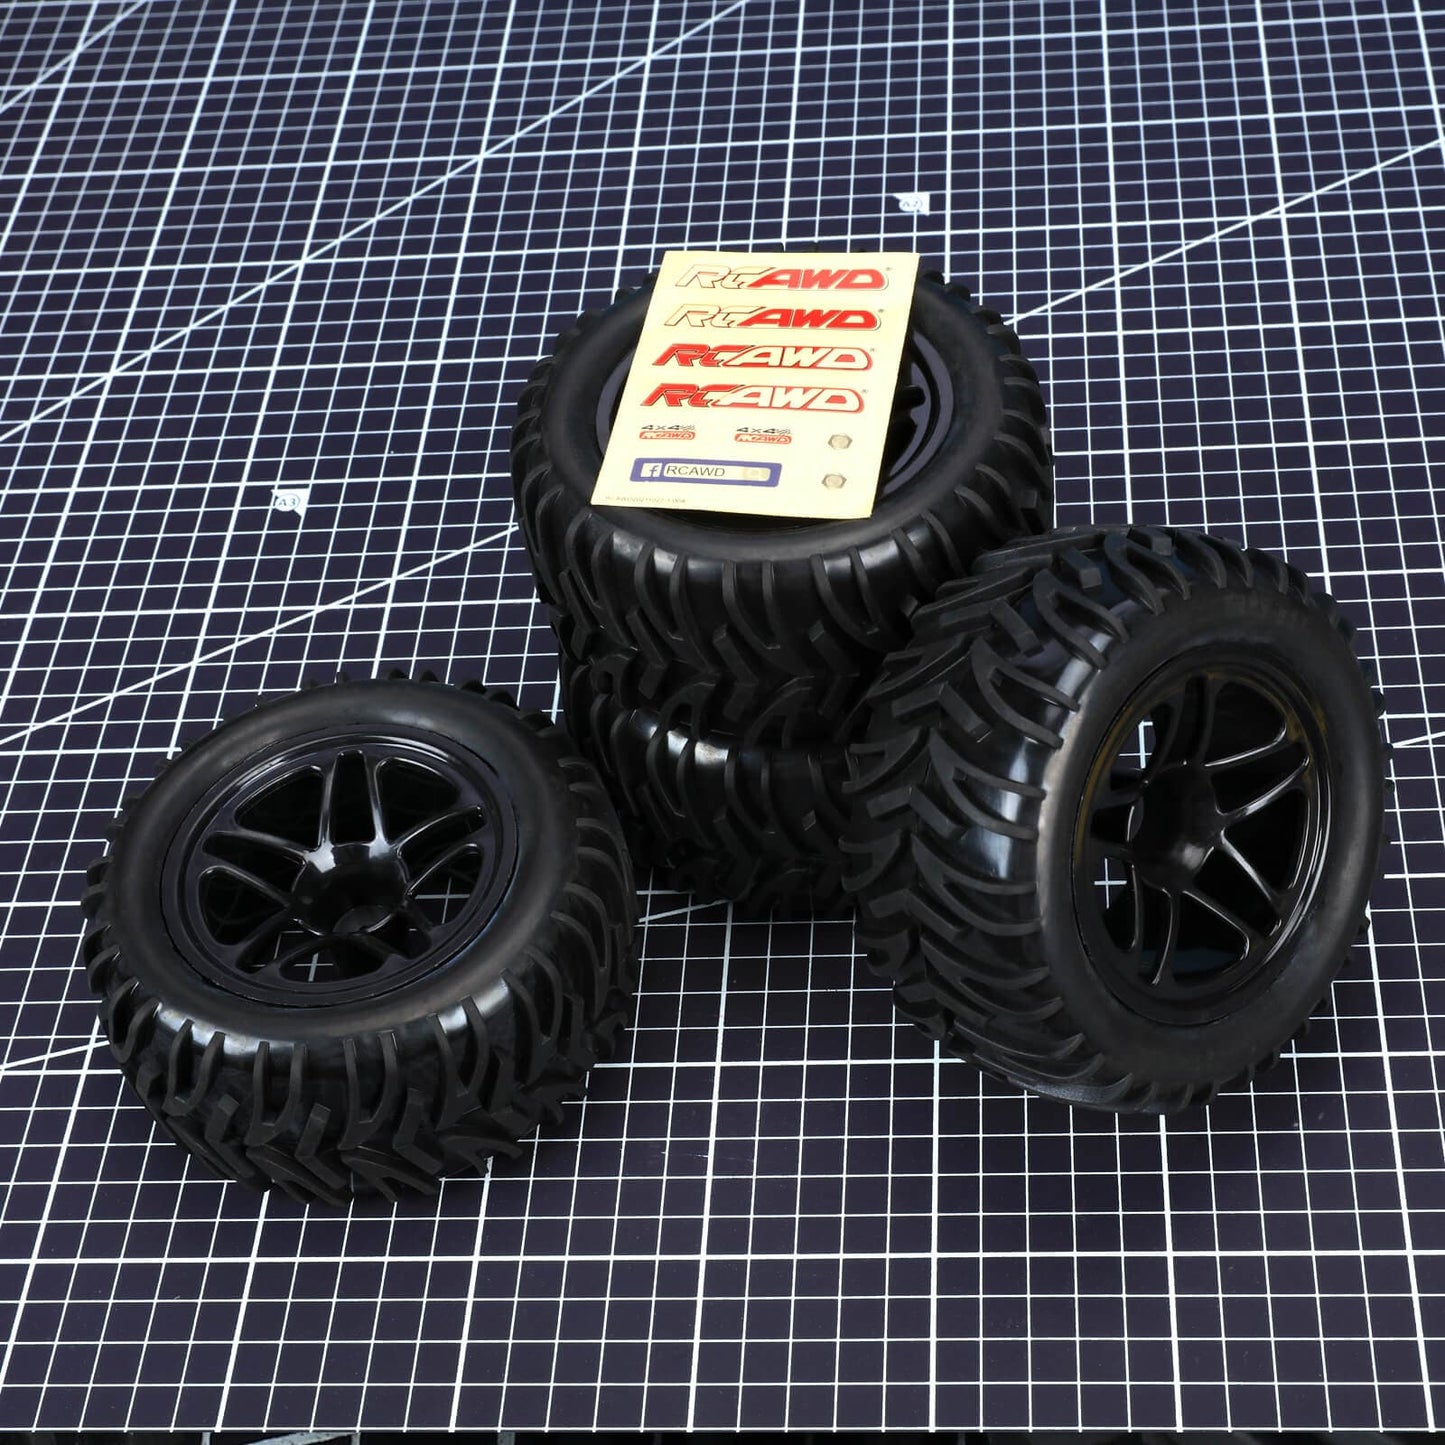 RCAWD Amazon RC Wheel & Tires 5 spokes 1/10 Pre-glued Monster Truck Wheel Tires LG-015BL LG-016BL